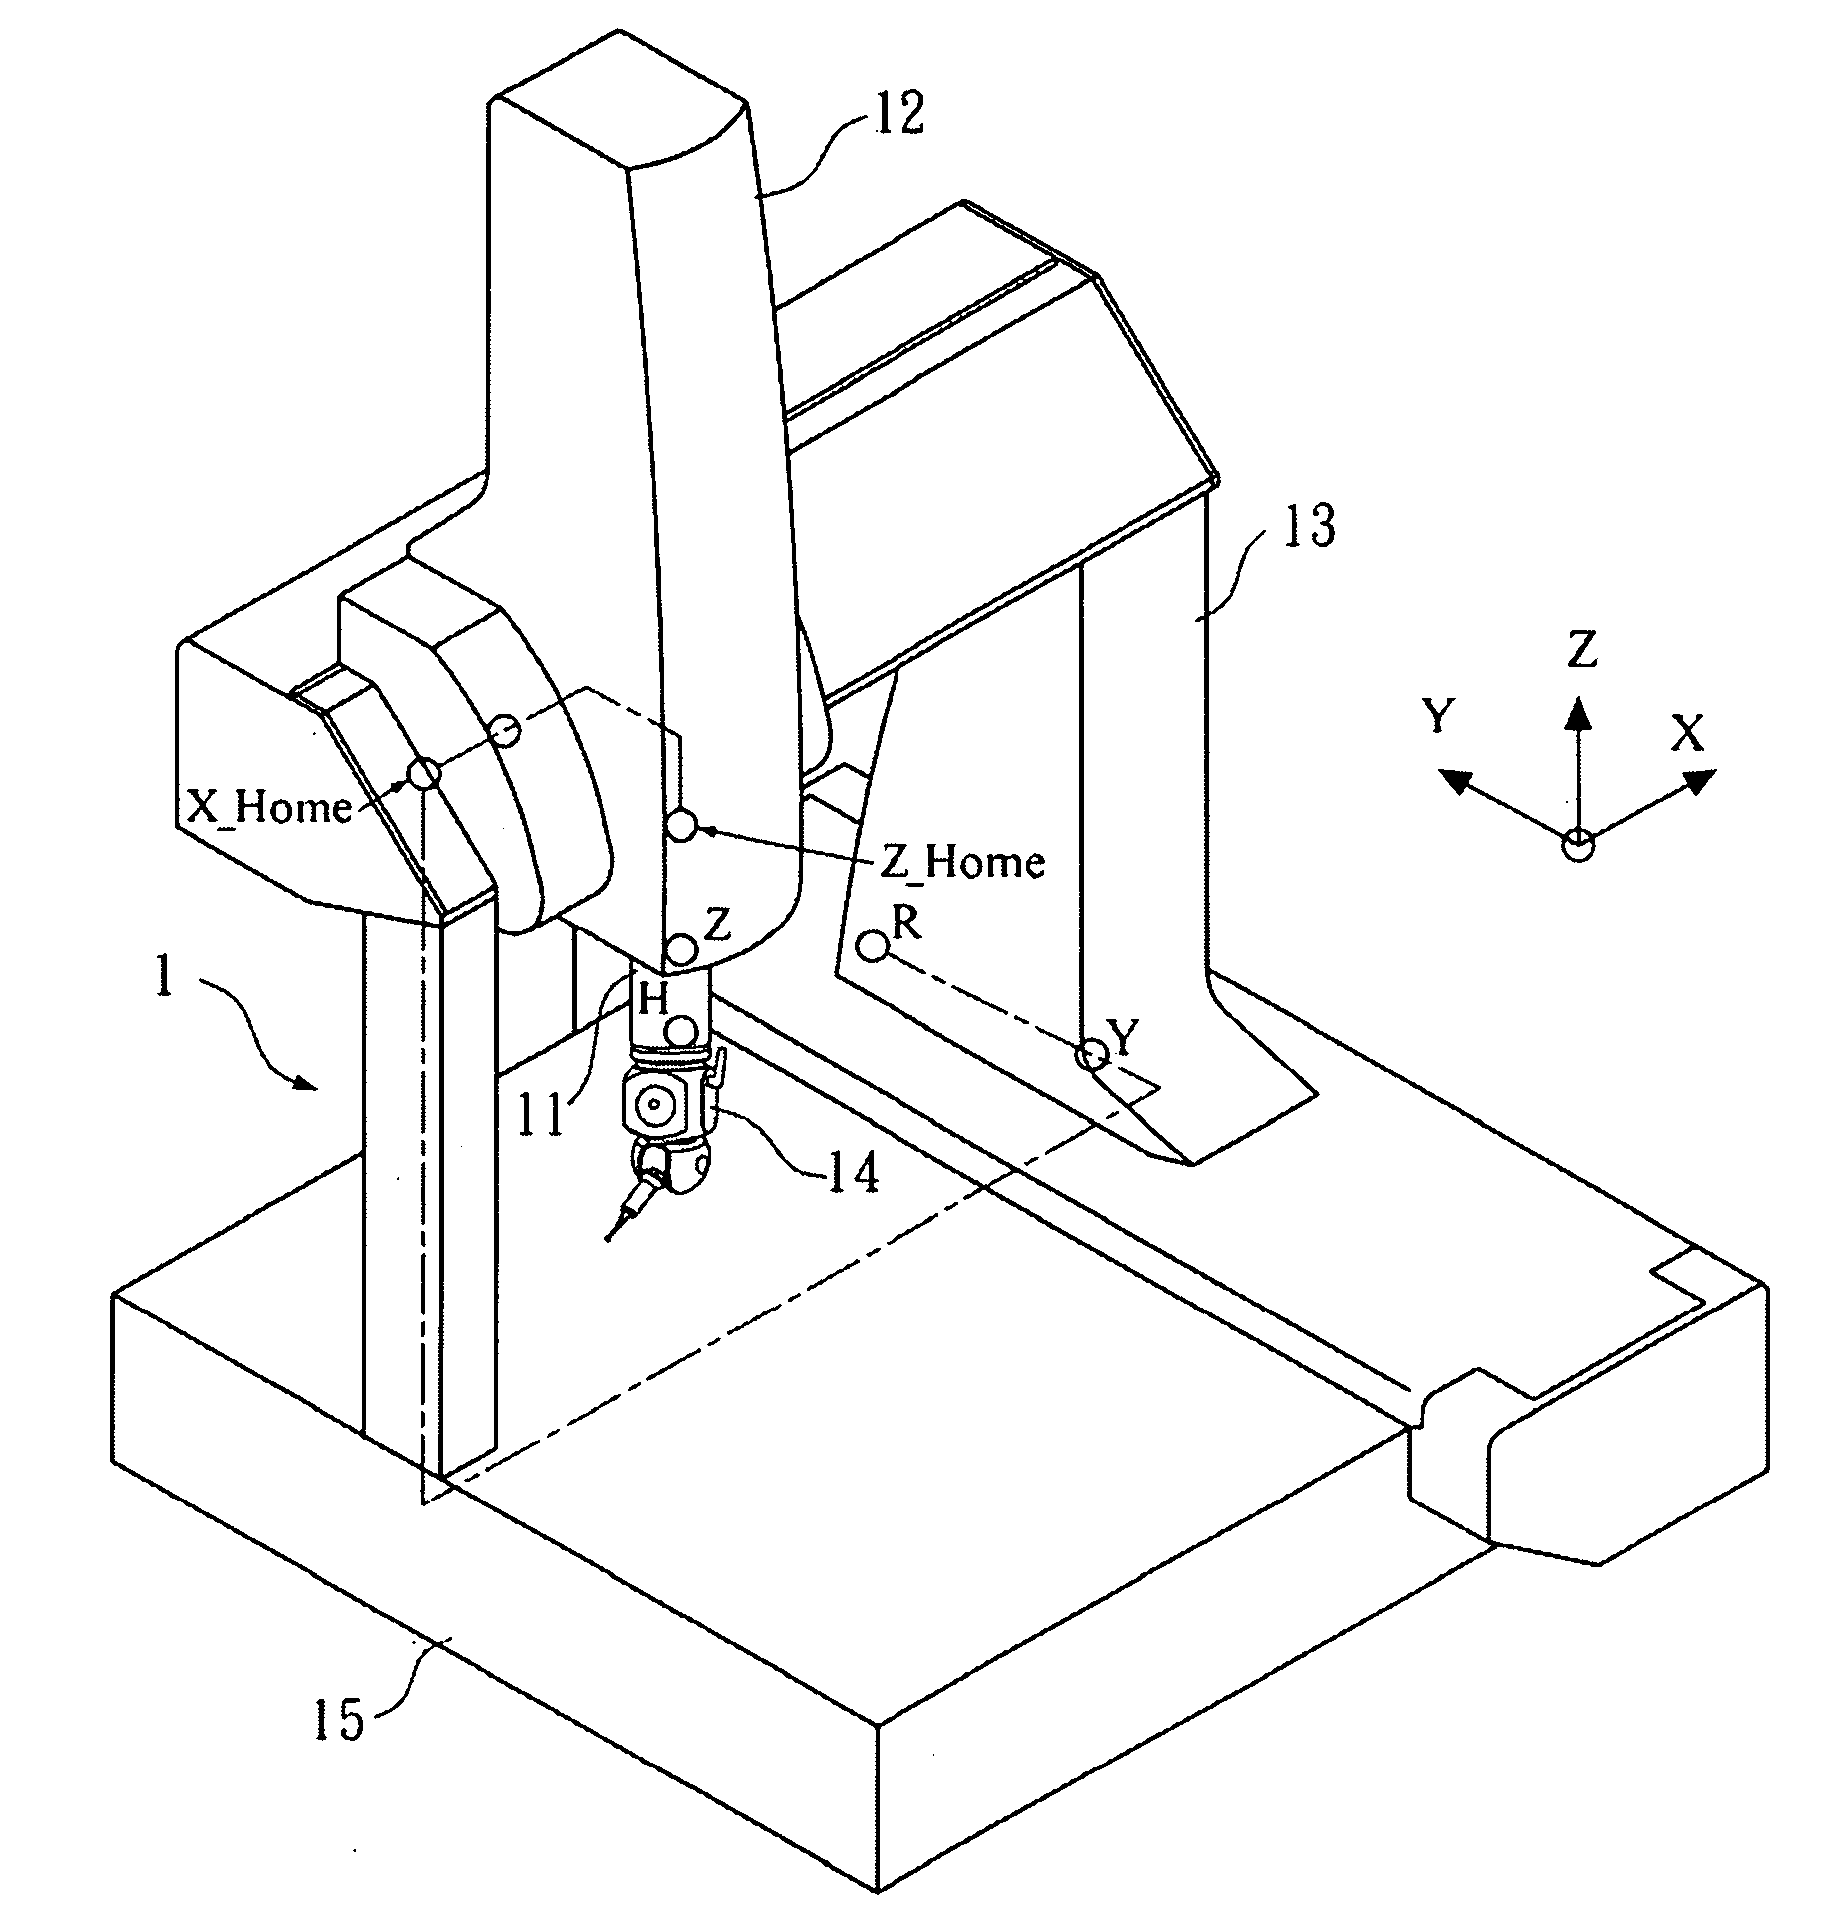 Thermal deformation error compensation method for coordinate measuring machine